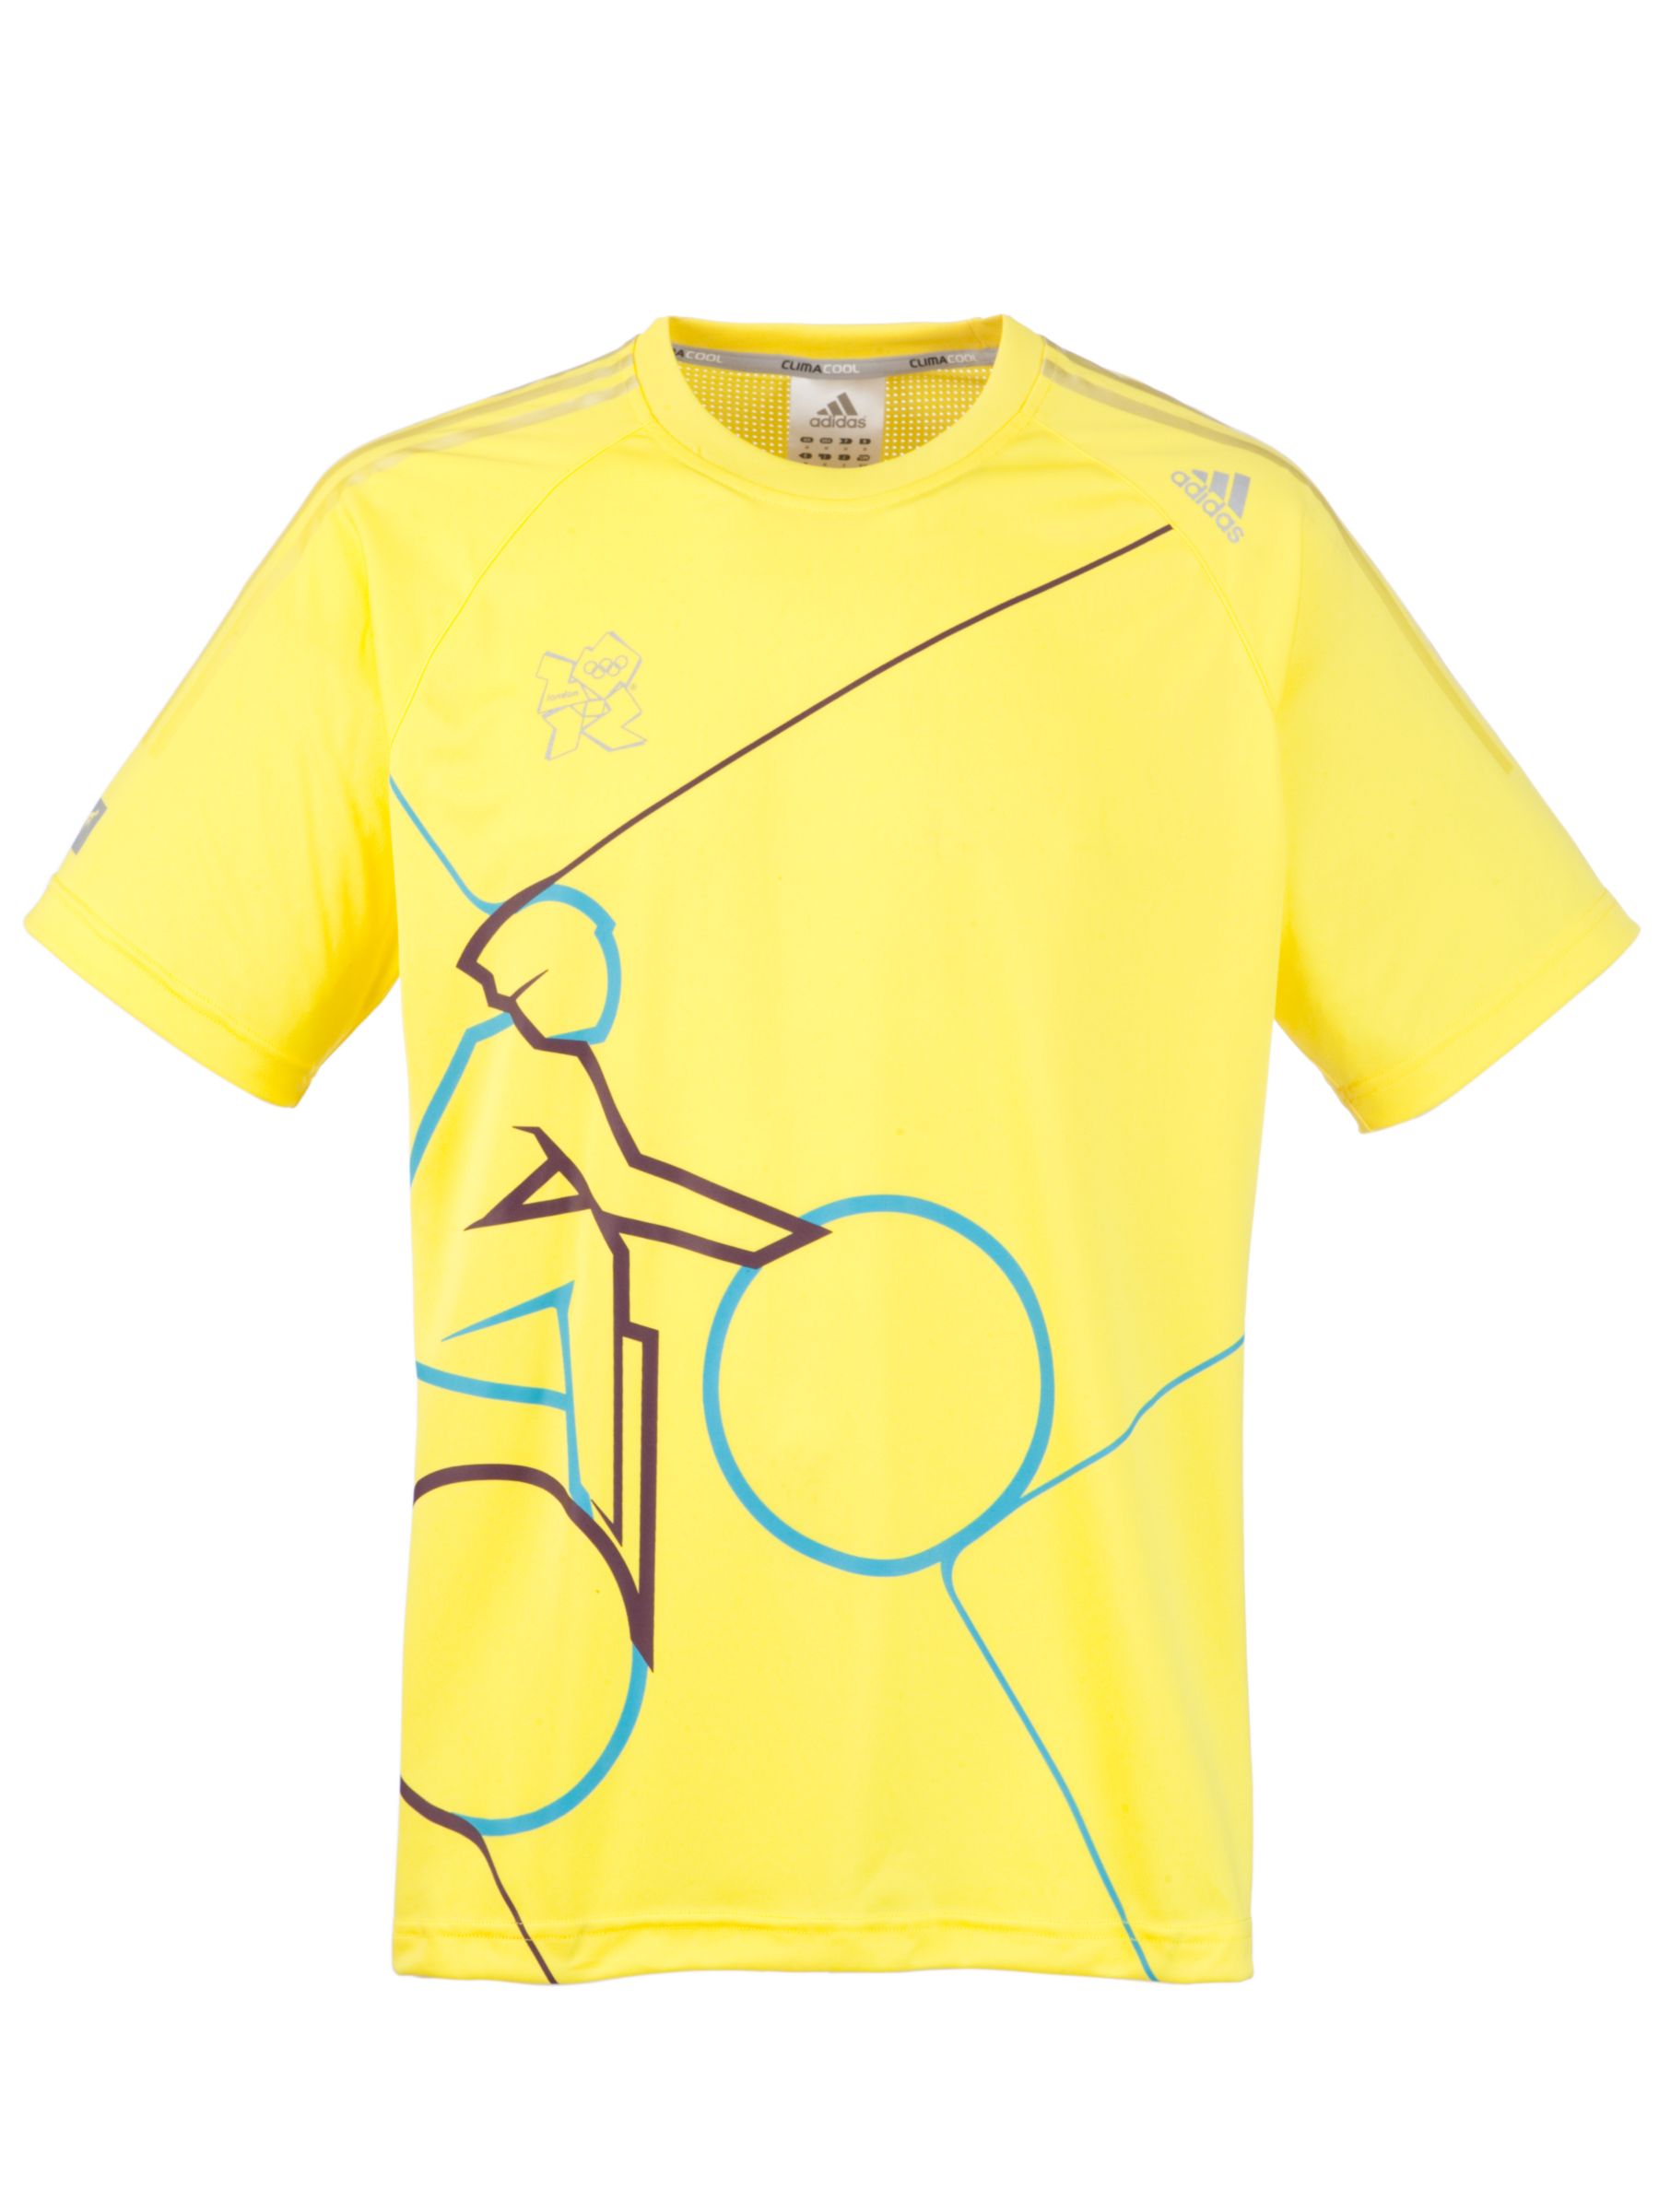 Adidas Team 2012 Cycling Graphic Print T-Shirt,